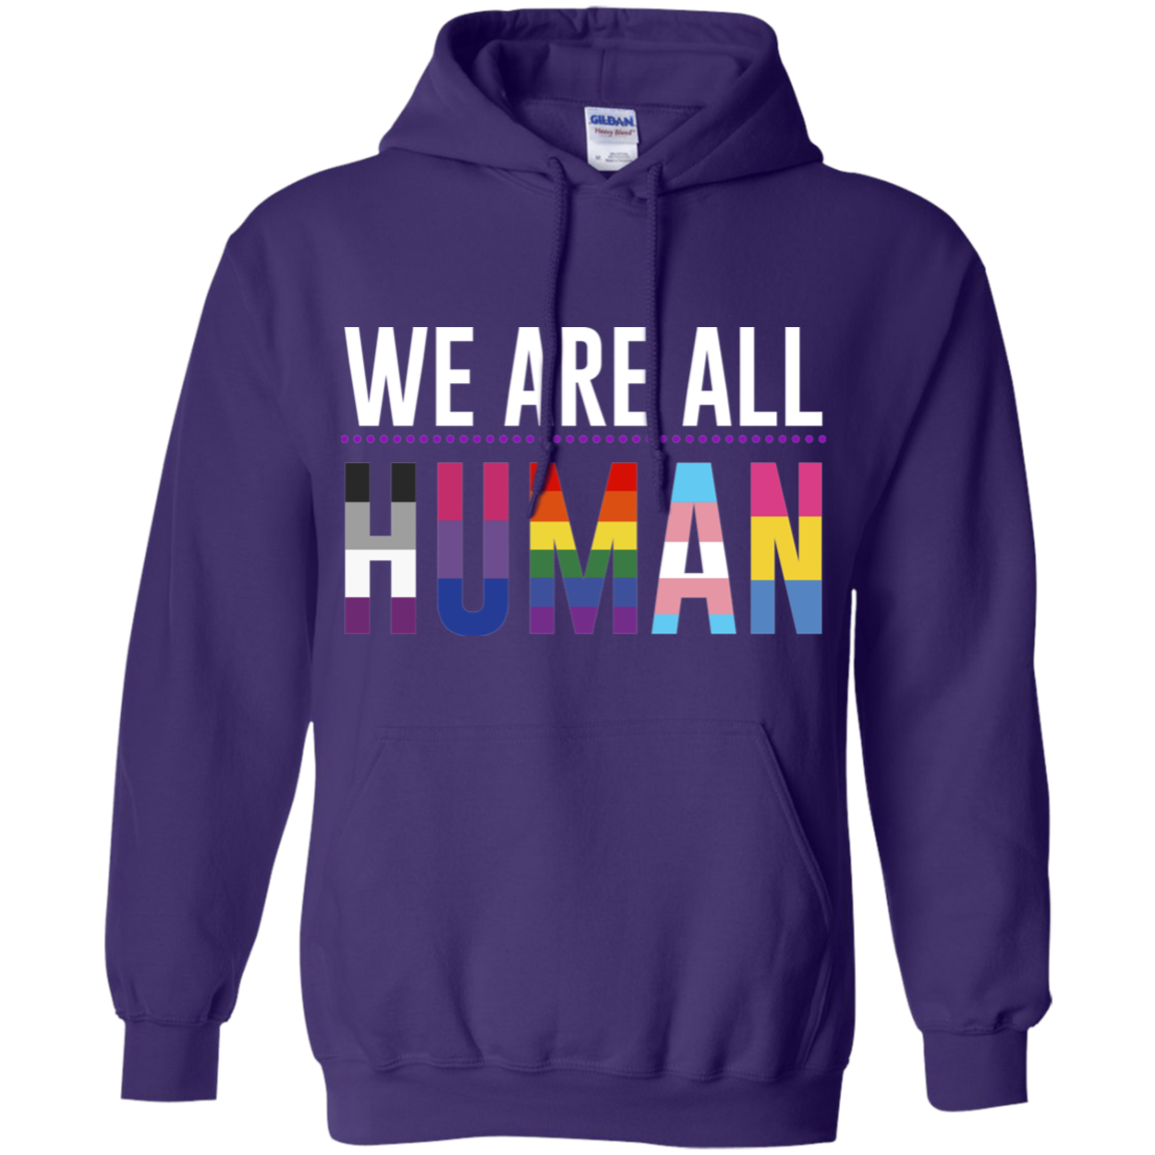 We Are All Human LGBT pride purple hoodie for women & men